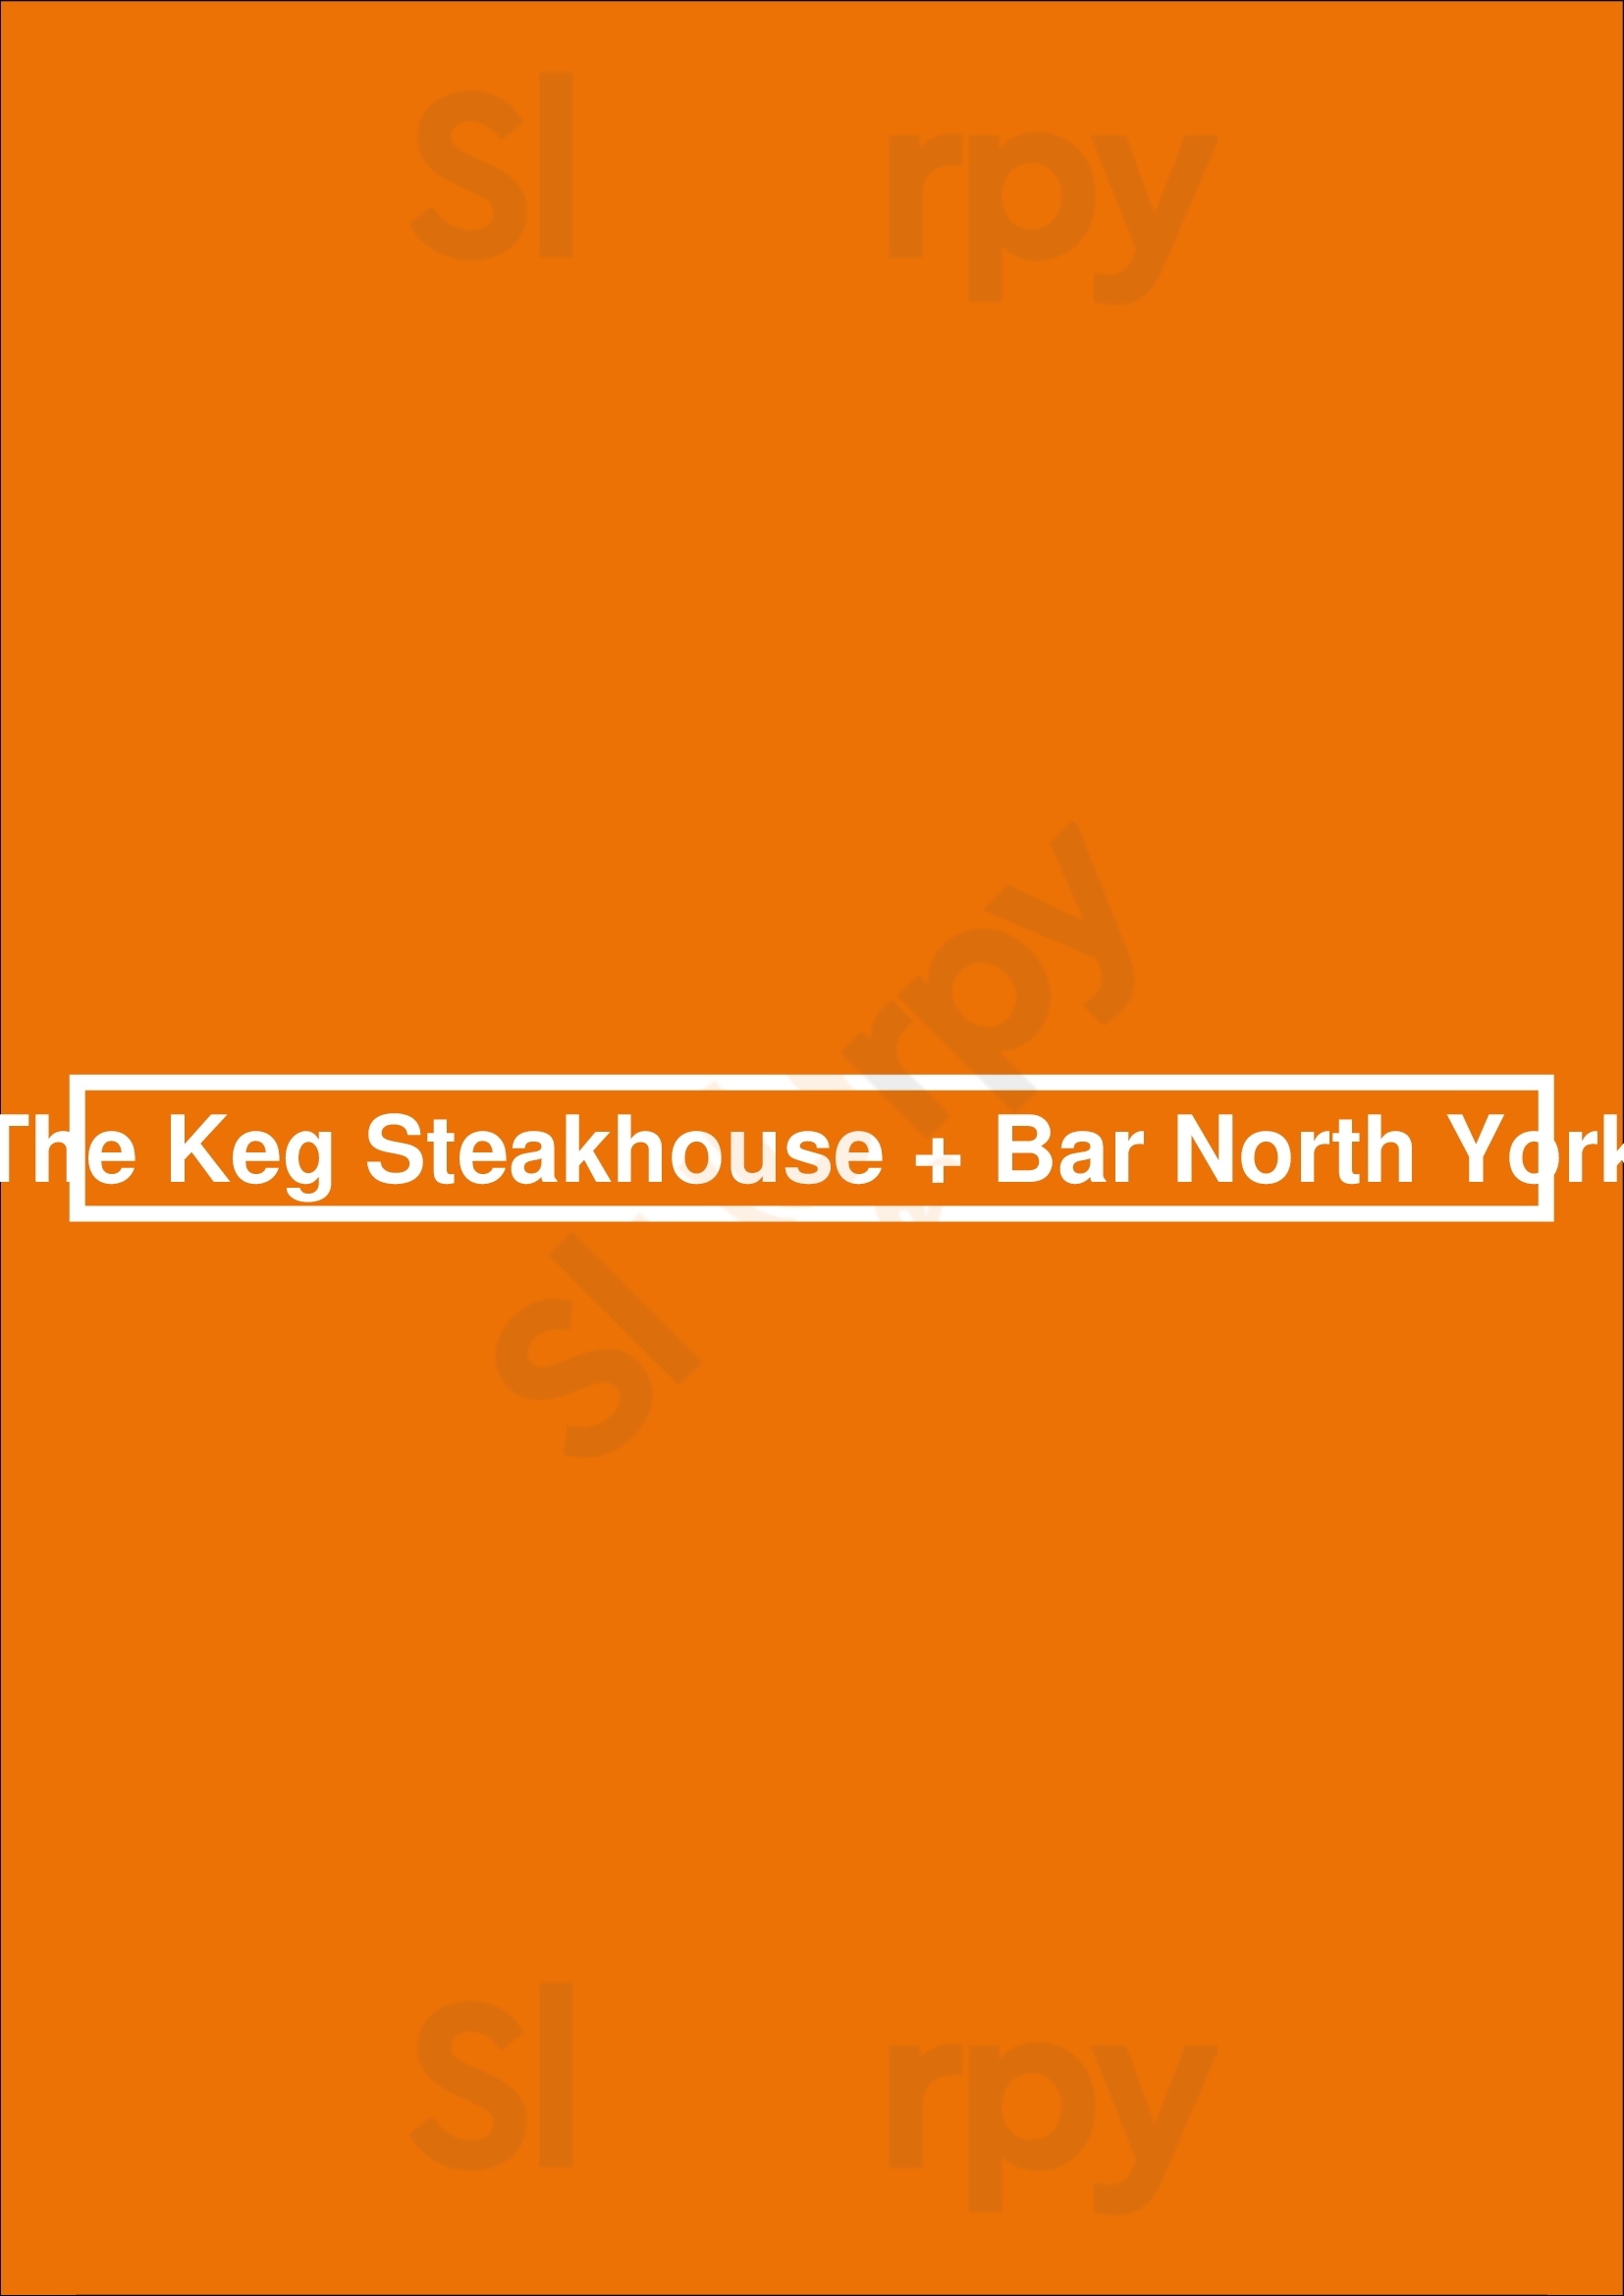 The Keg Steakhouse + Bar - North York Toronto Menu - 1